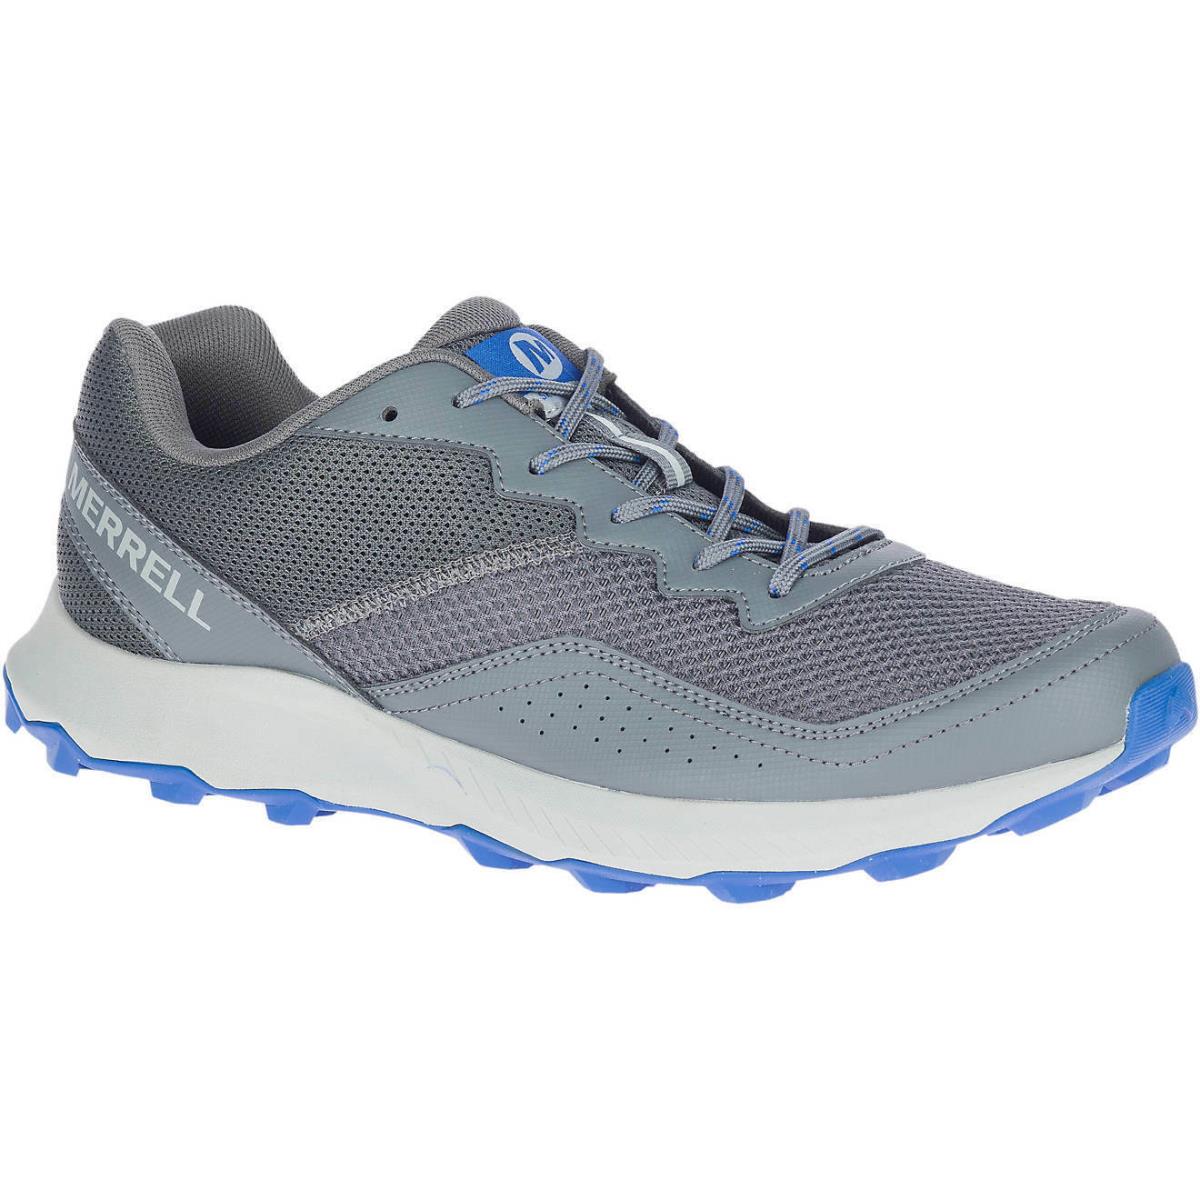 Men`s Merrell J135293 Skyrocket Rock/cobalt Hiking Shoe Sneakers